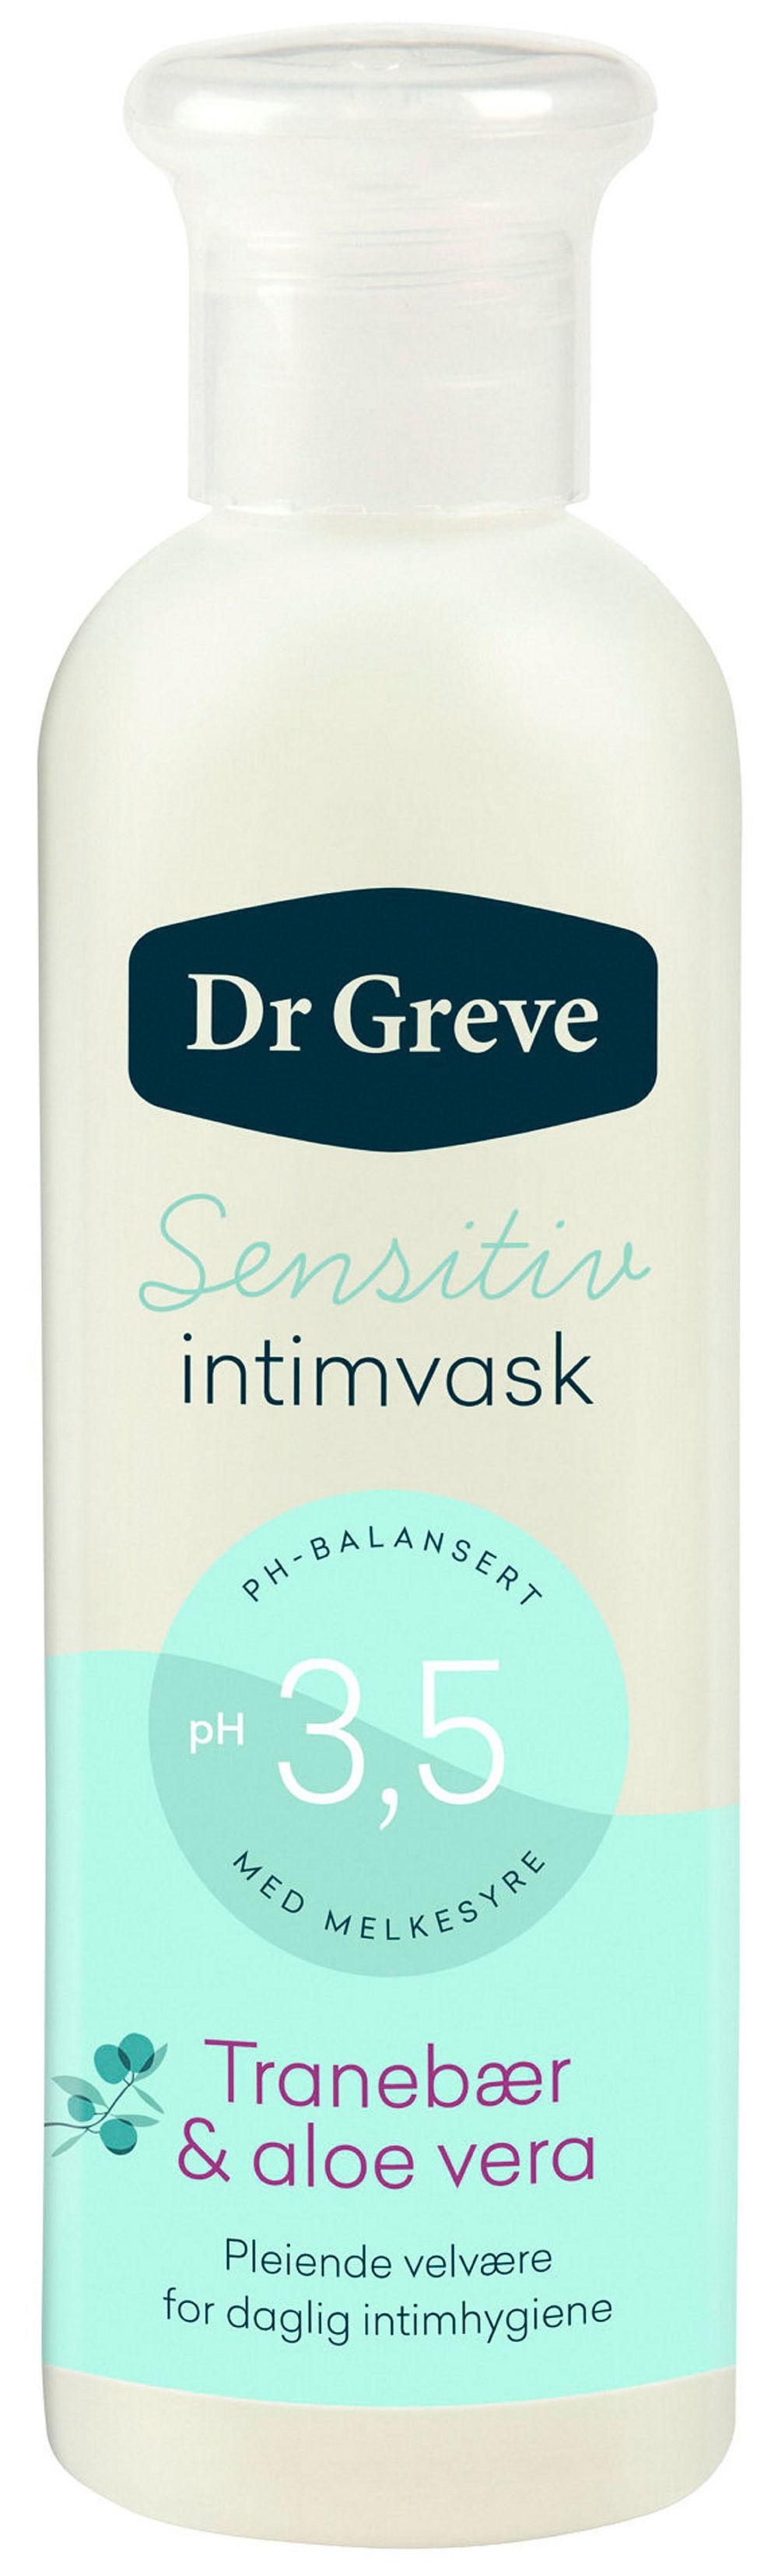 Dr. Greve Intimvask 200 ml